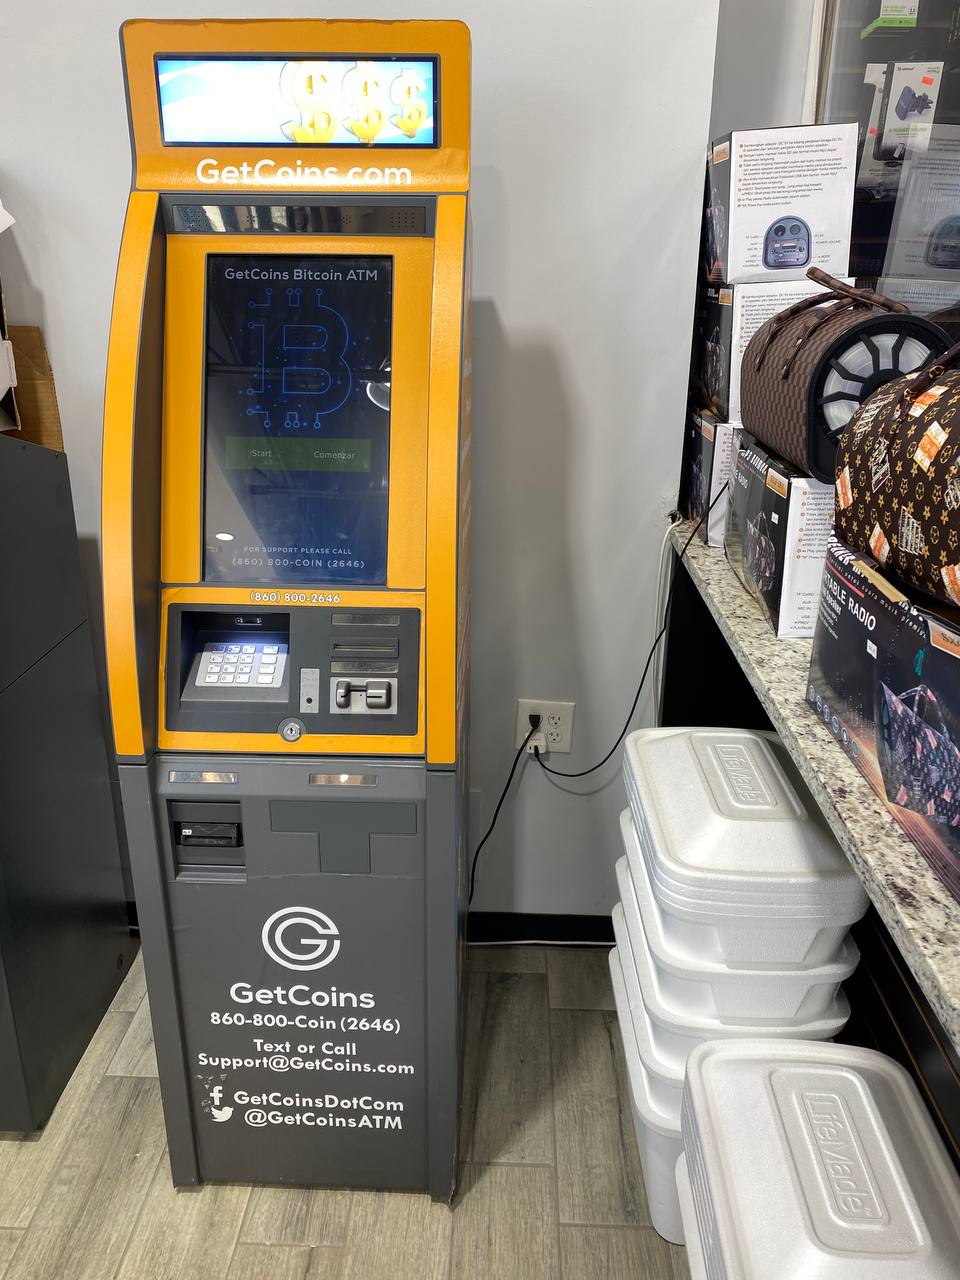 Getcoins - Bitcoin ATM - Inside of Smart Food Mart 1 in Acworth, Georgia